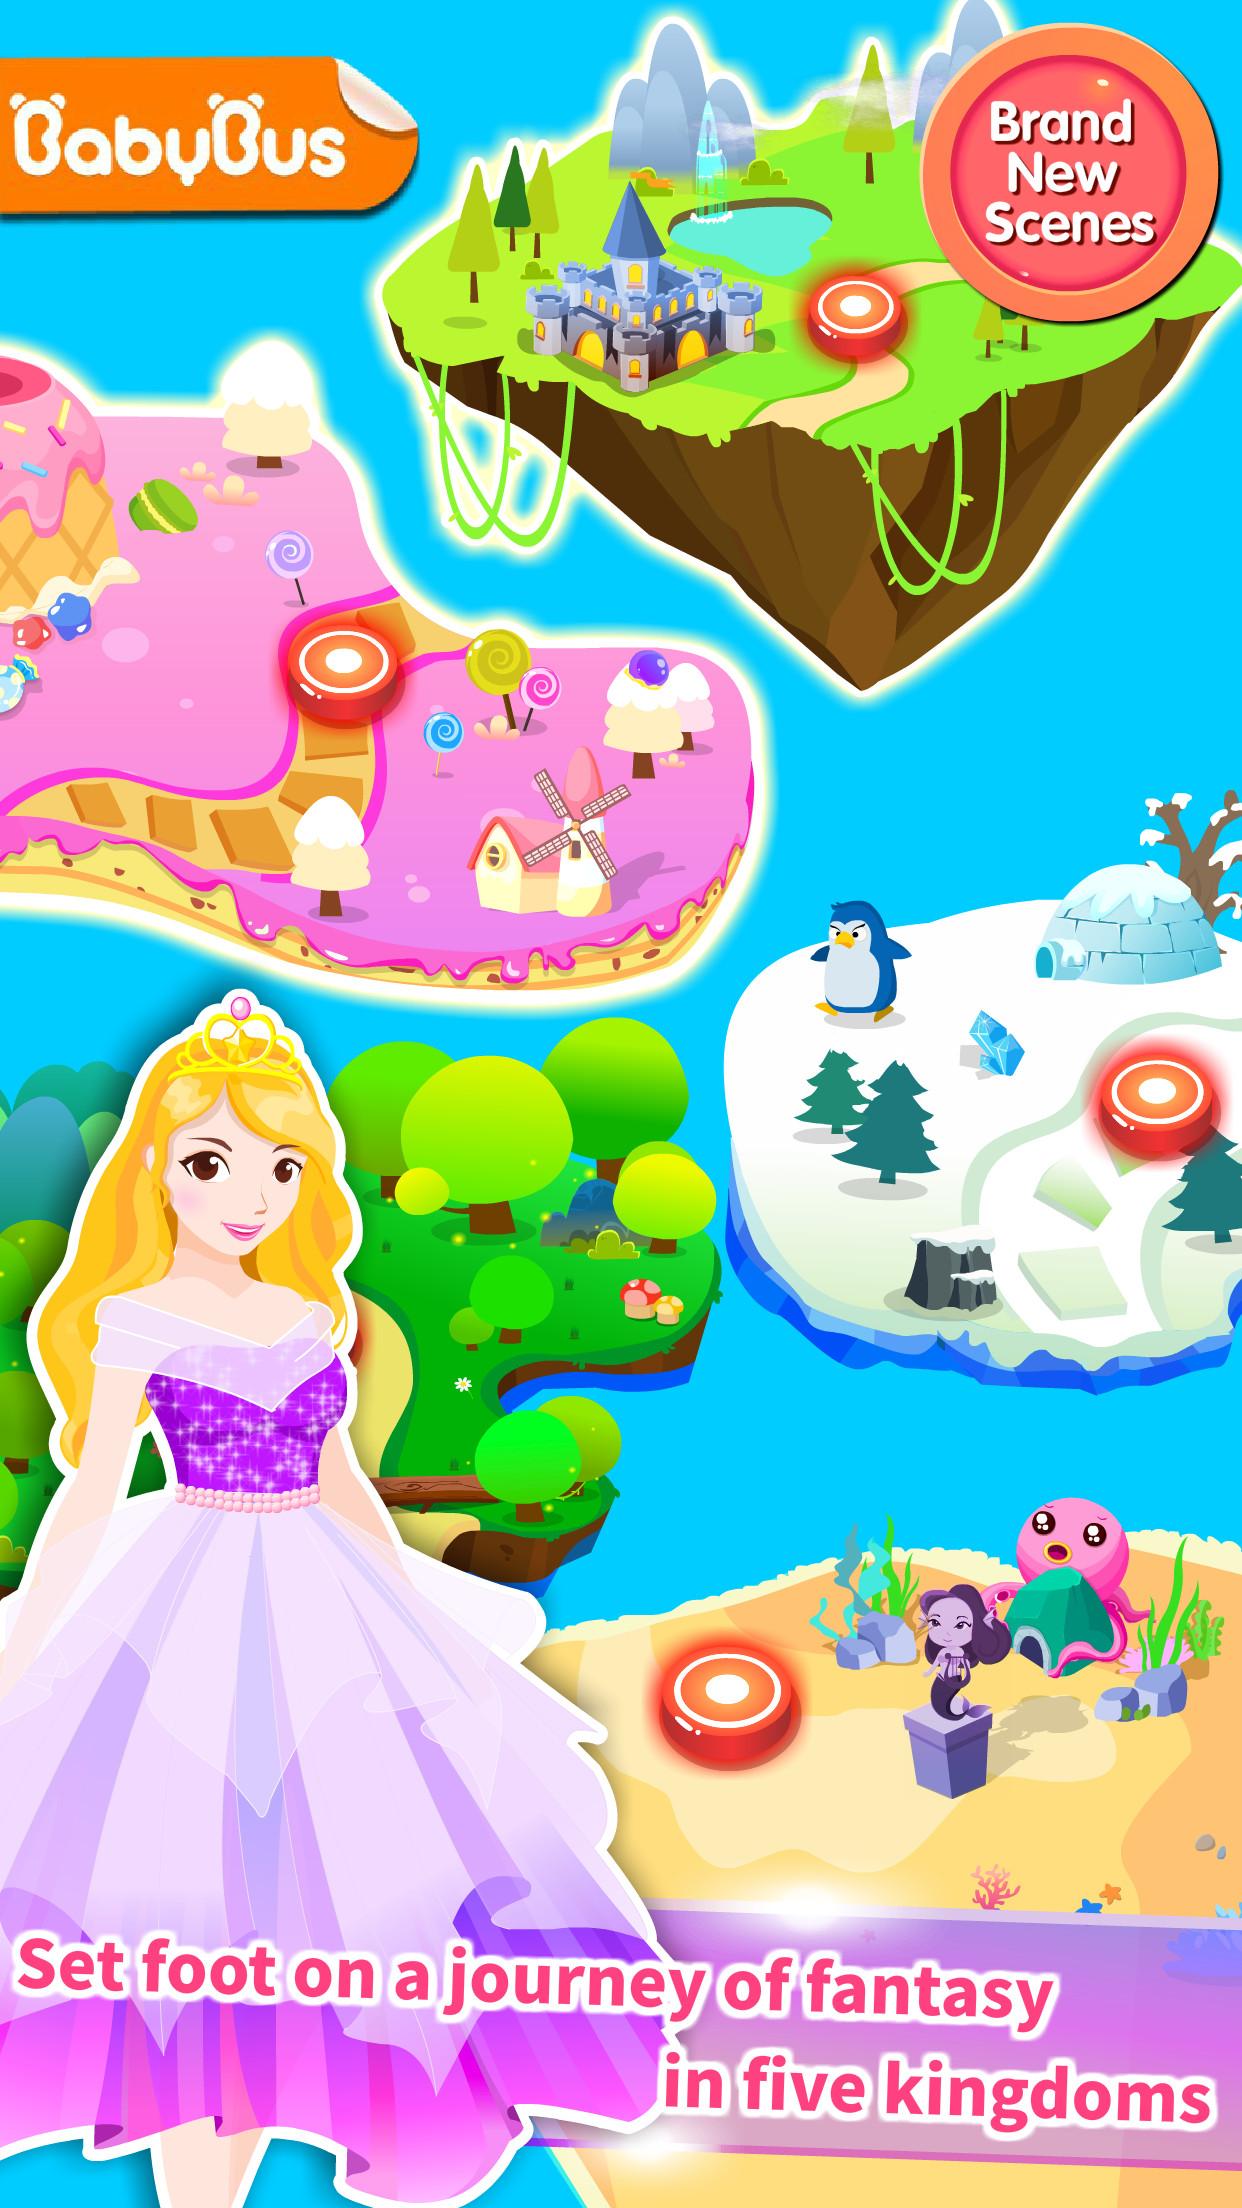 Pin-up Princess Dress up Apk Download for Android- Latest version 1.0.1-  air.azaleasdolls.pinupprincess